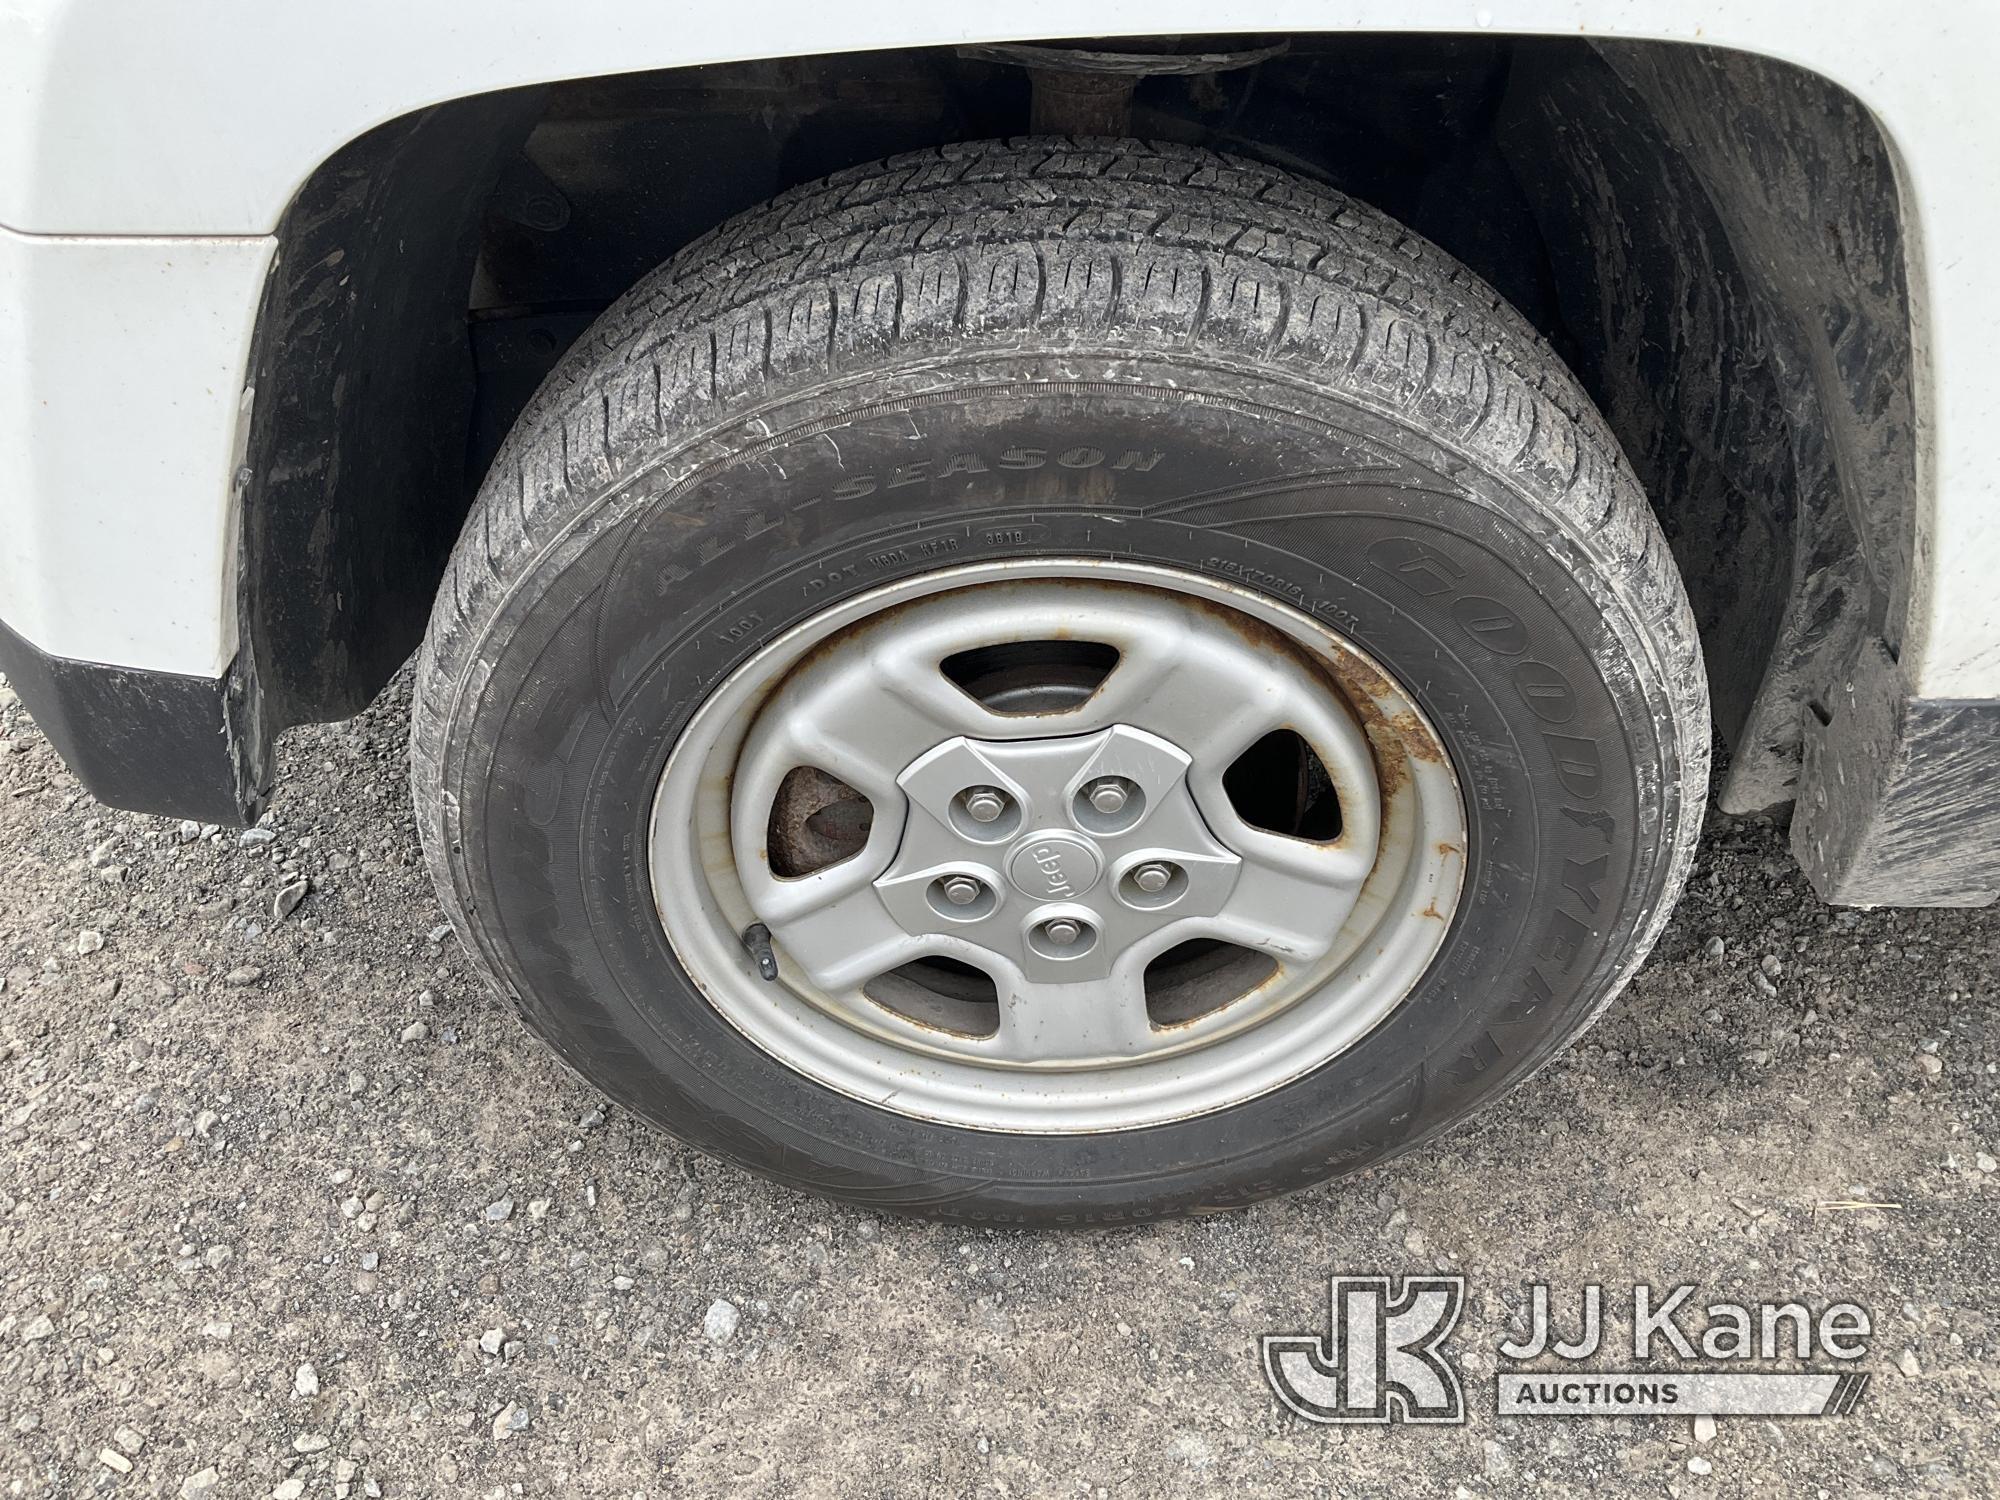 (Rome, NY) 2014 Jeep Patriot 4x4 4-Door Sport Utility Vehicle Runs & Moves, Body & Rust Damage, Sell